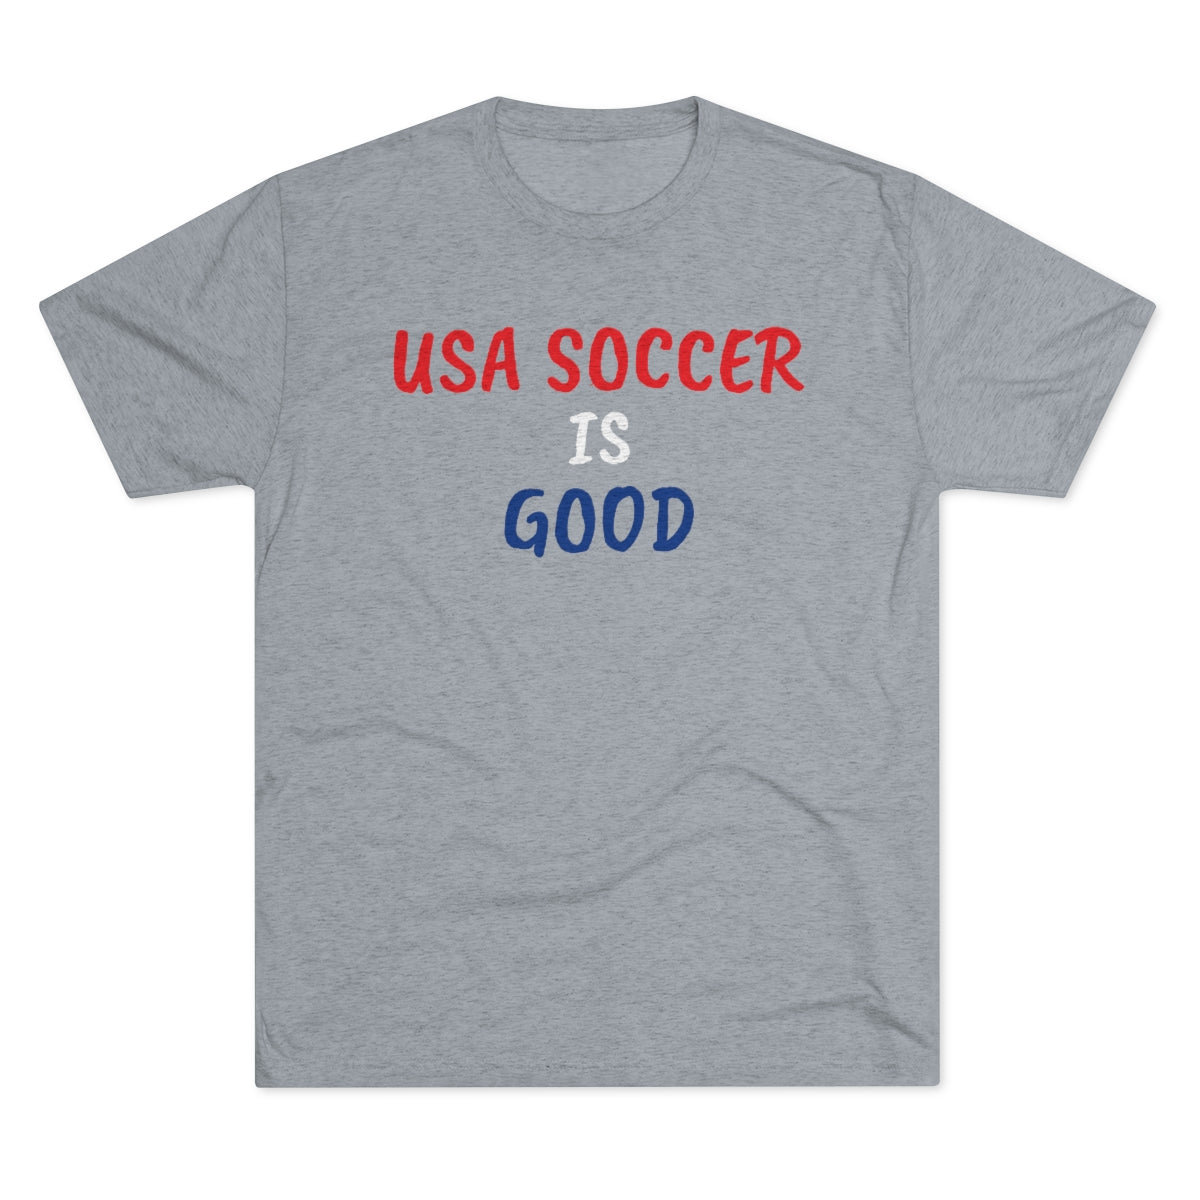 USA SOCCER IS GOOD Shirt - IsGoodBrand